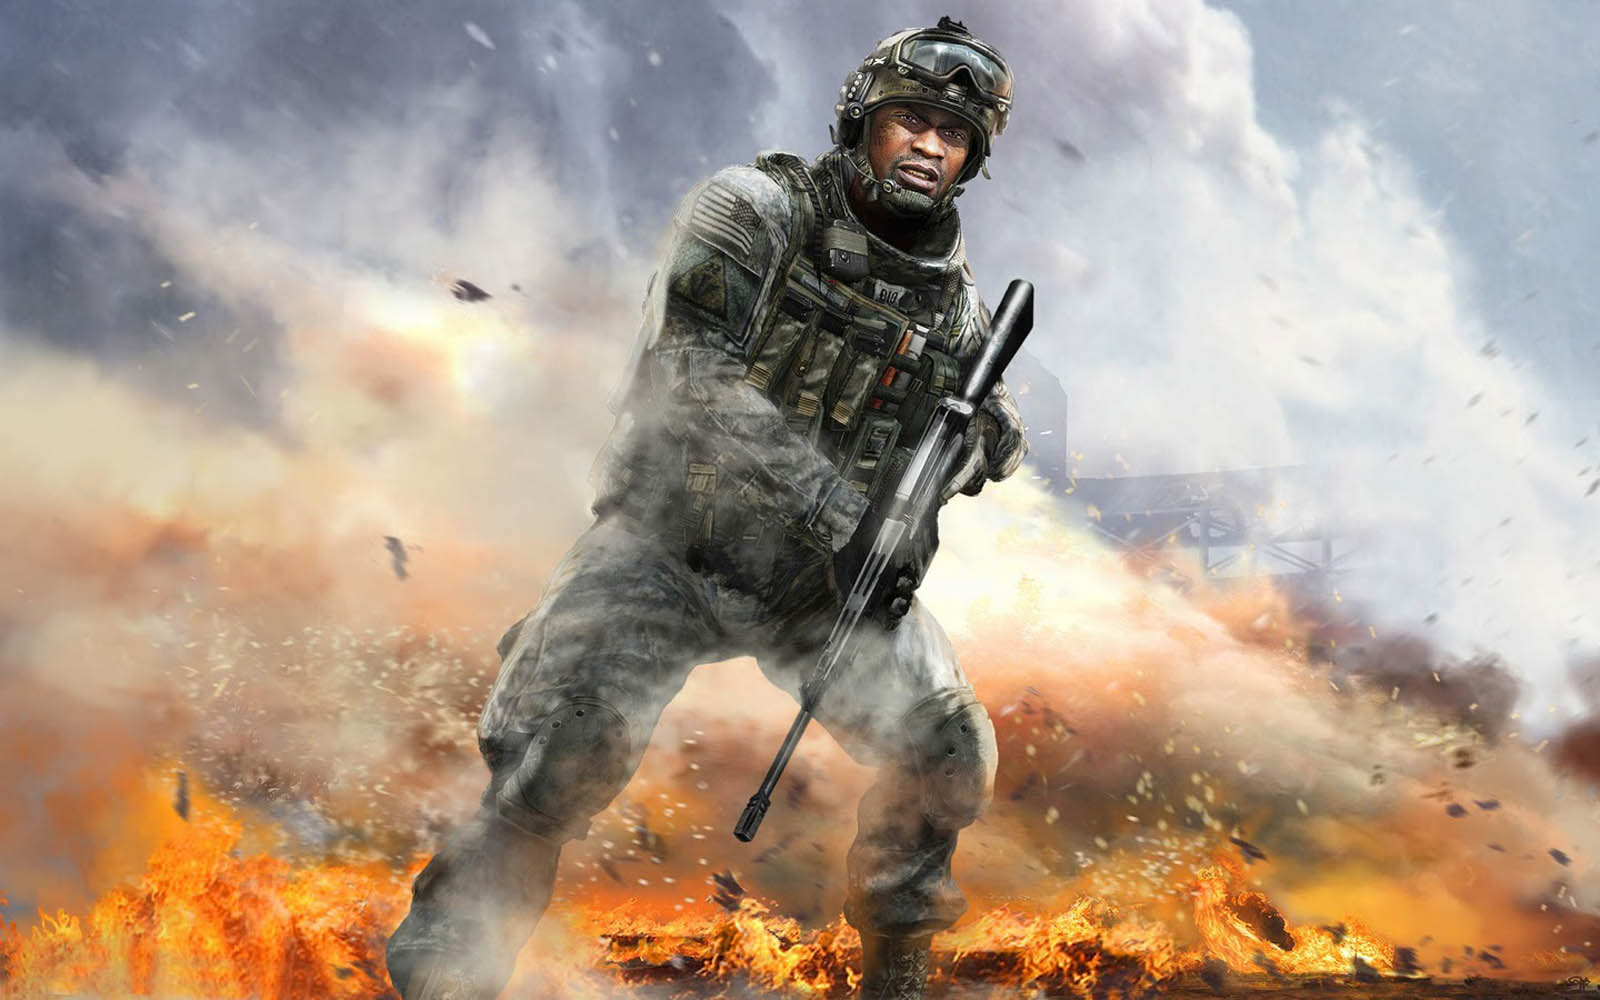 Wallpapers Call Of Duty Modern Warfare 3 Wallpapers Afalchi Free images wallpape [afalchi.blogspot.com]